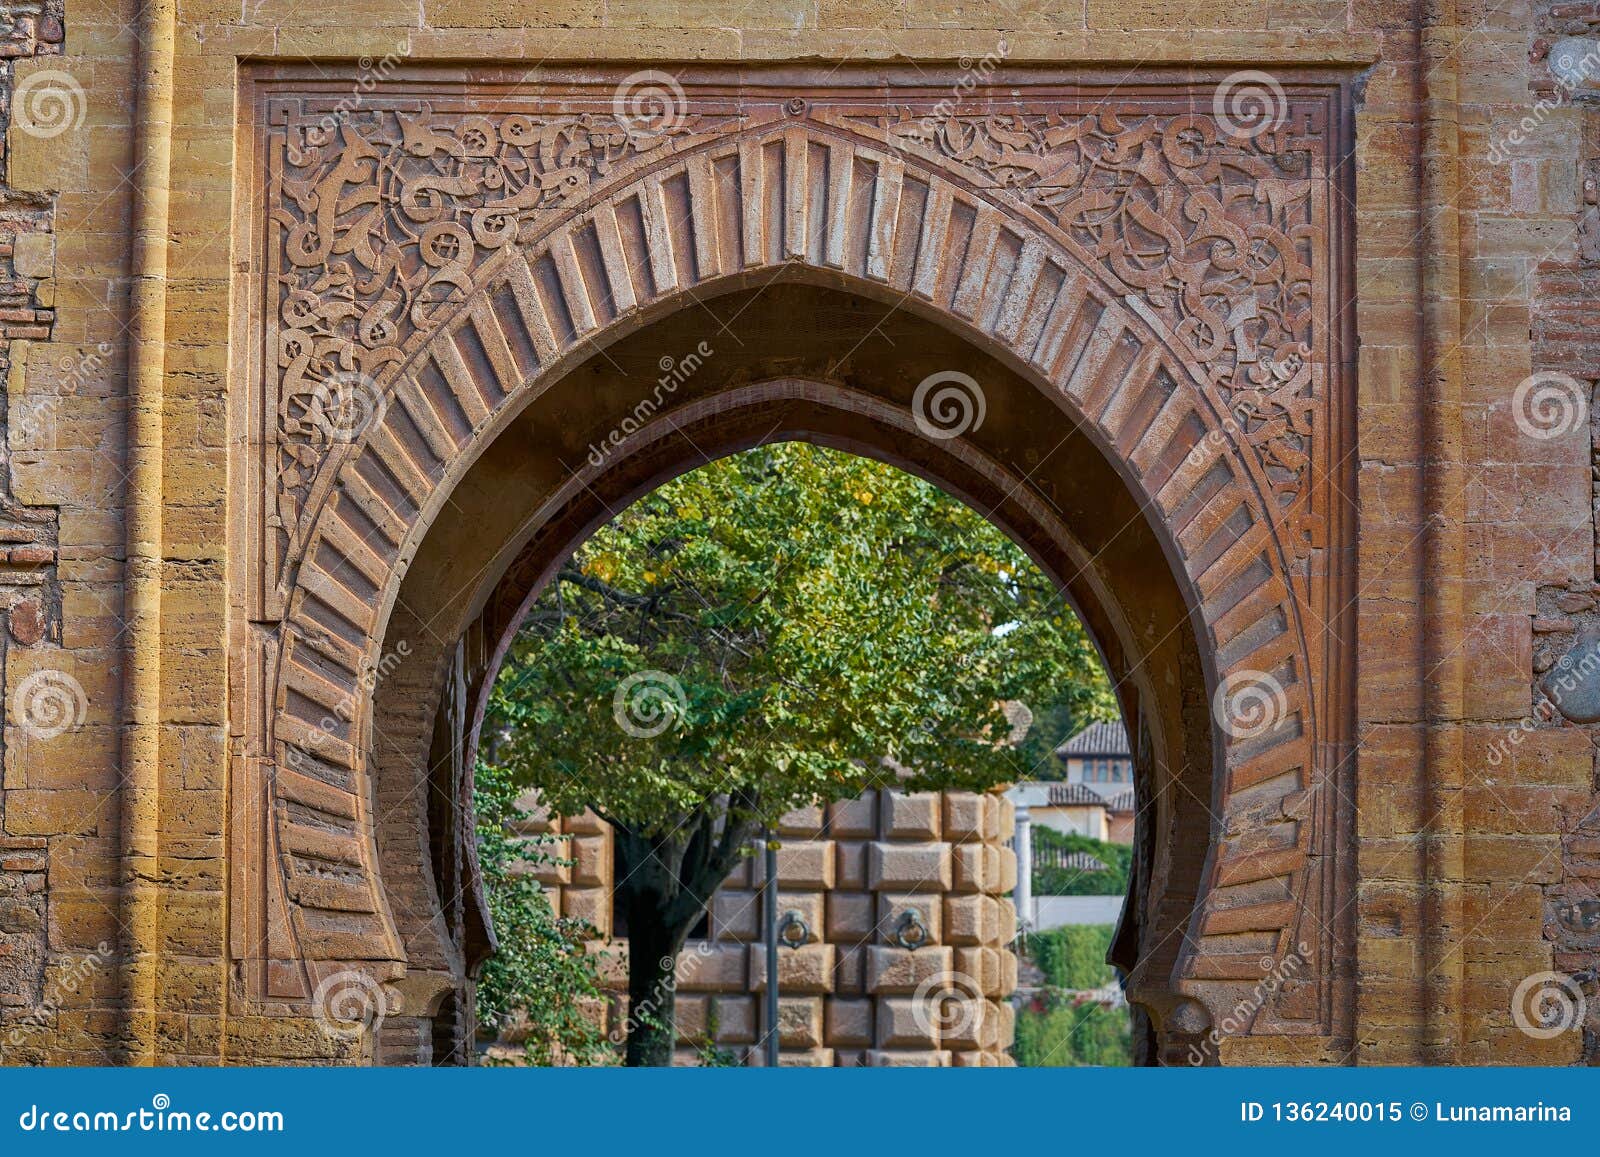 alhambra arch puerta del vino in granada